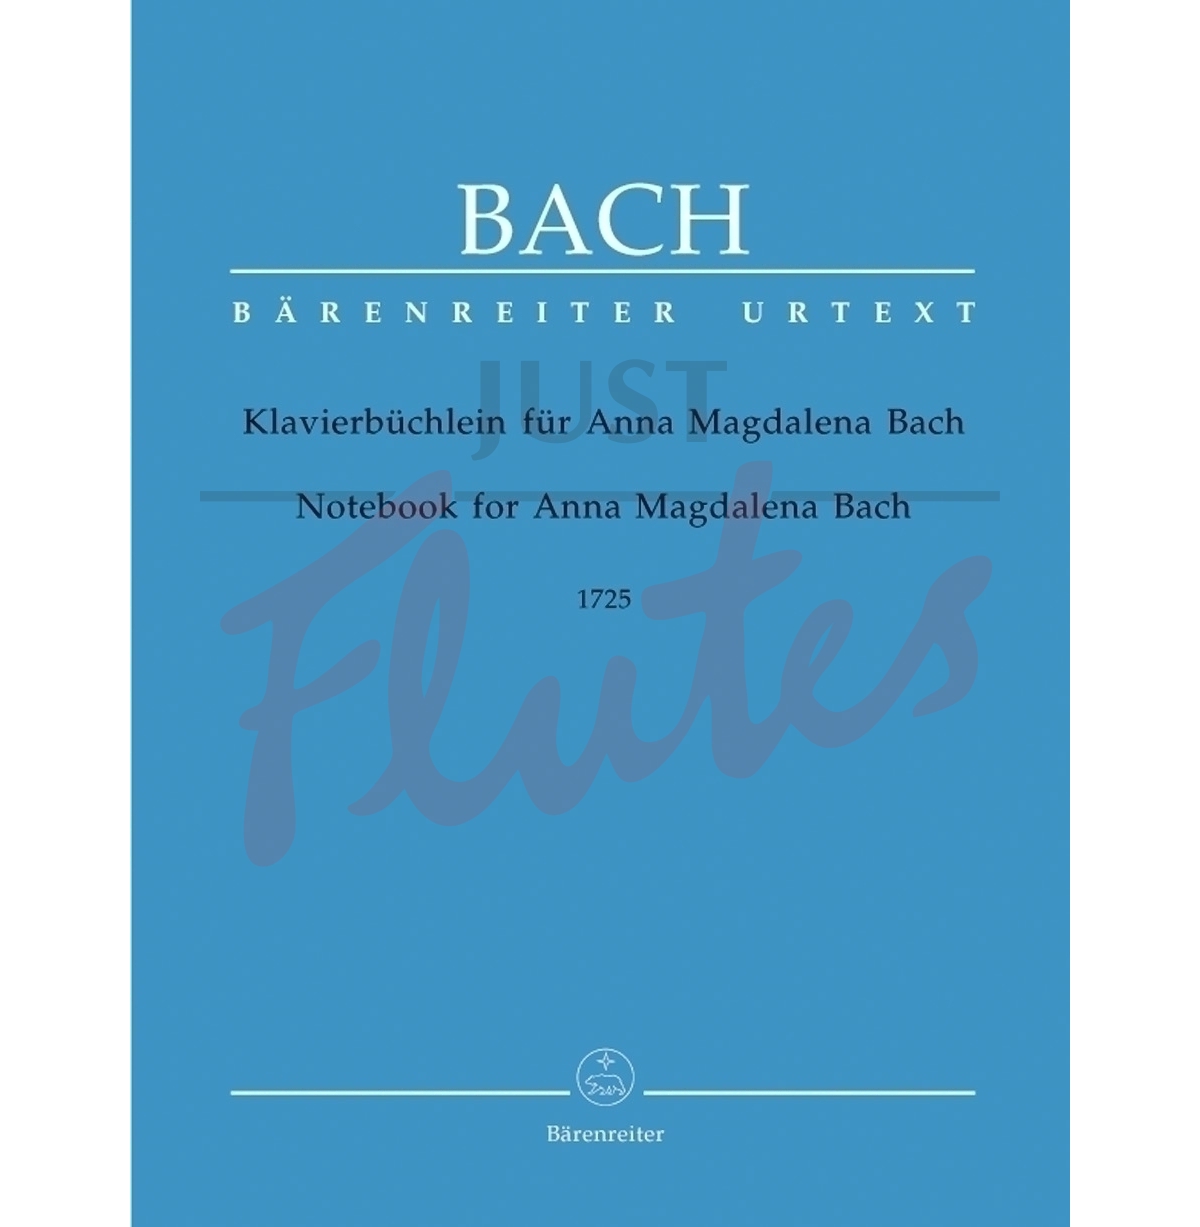 Piano Notebook For Anna Magdalena Bach